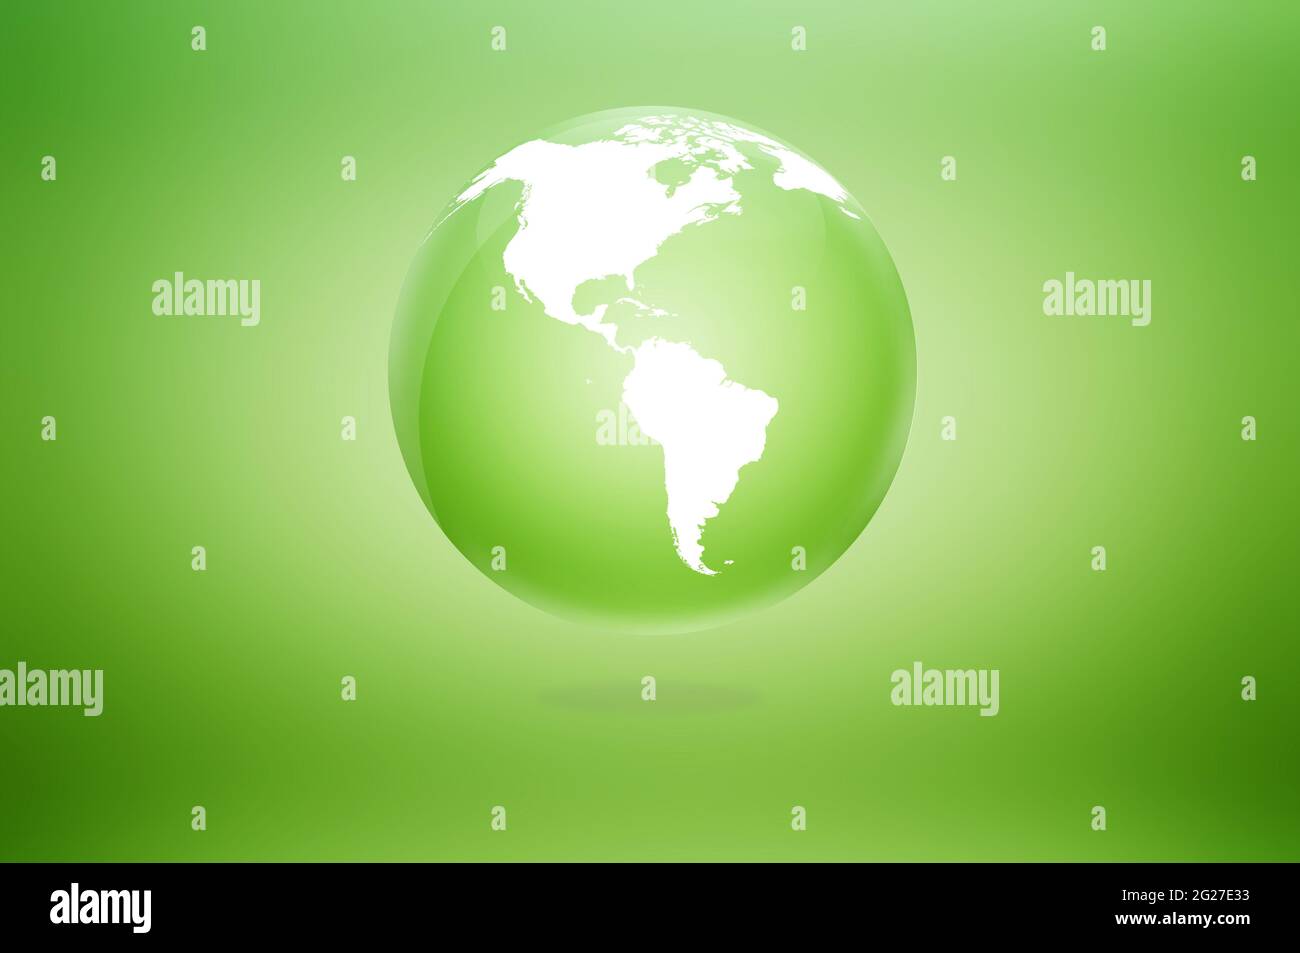 Farbenfrohe grüne glänzende Globenikone Stockfoto